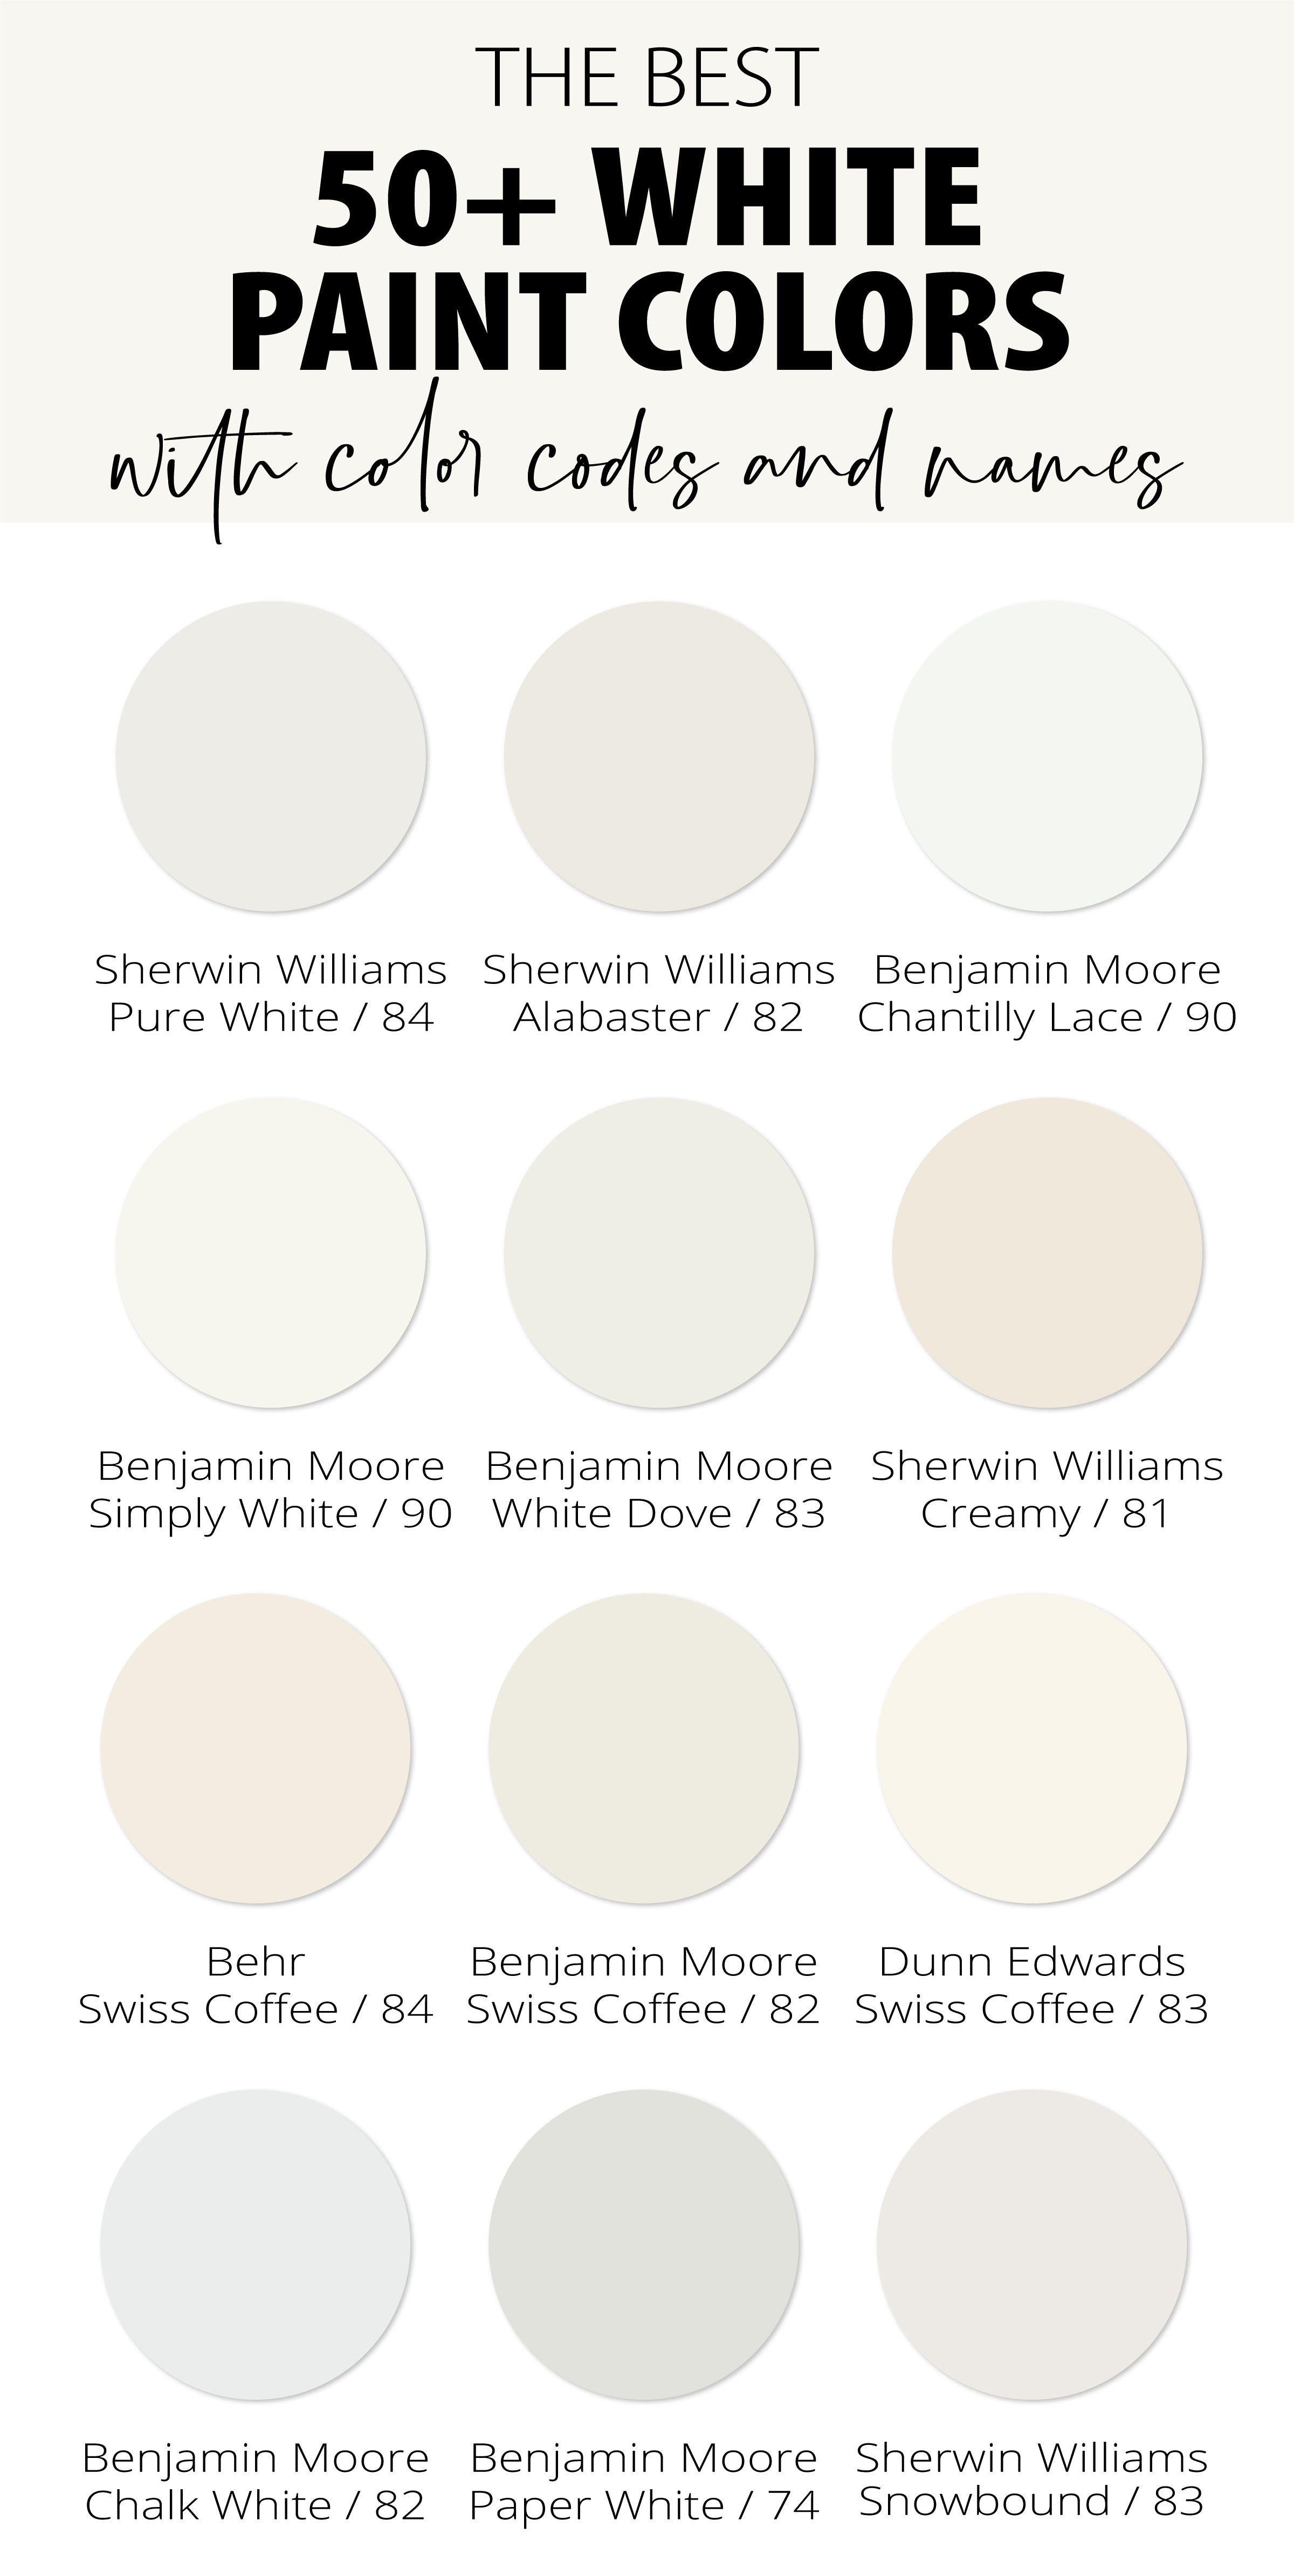 The Perfect White Paint Color - How to Choose - Paintzen